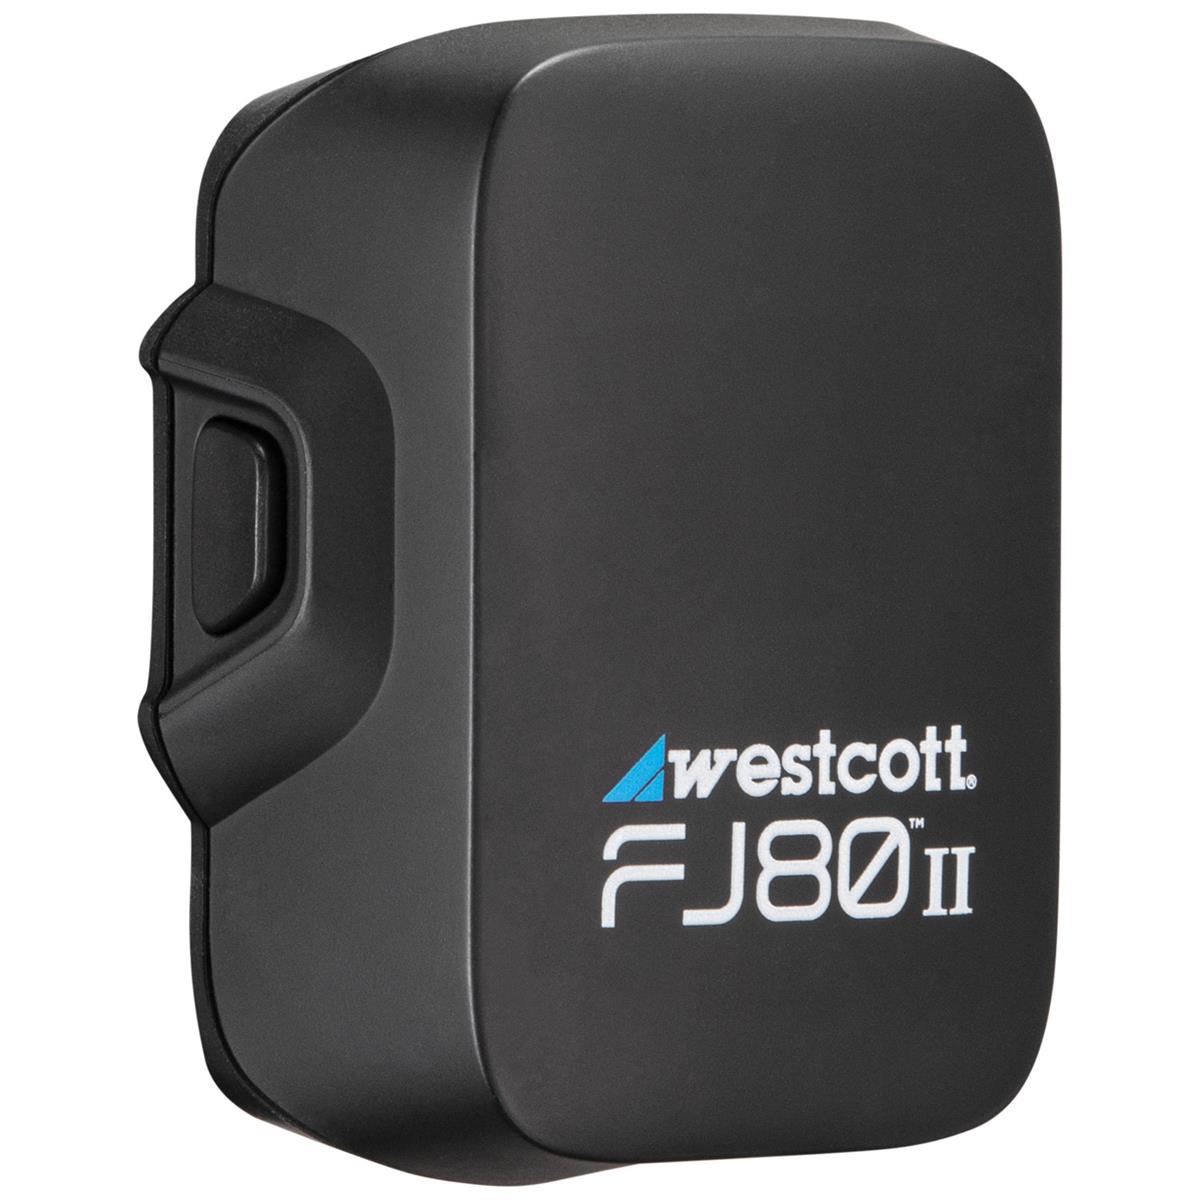 Image of Westcott 11Wh 11.1V 1600mAh DC Li-Po Battery for FJ80 II TTL Speedlight Flash